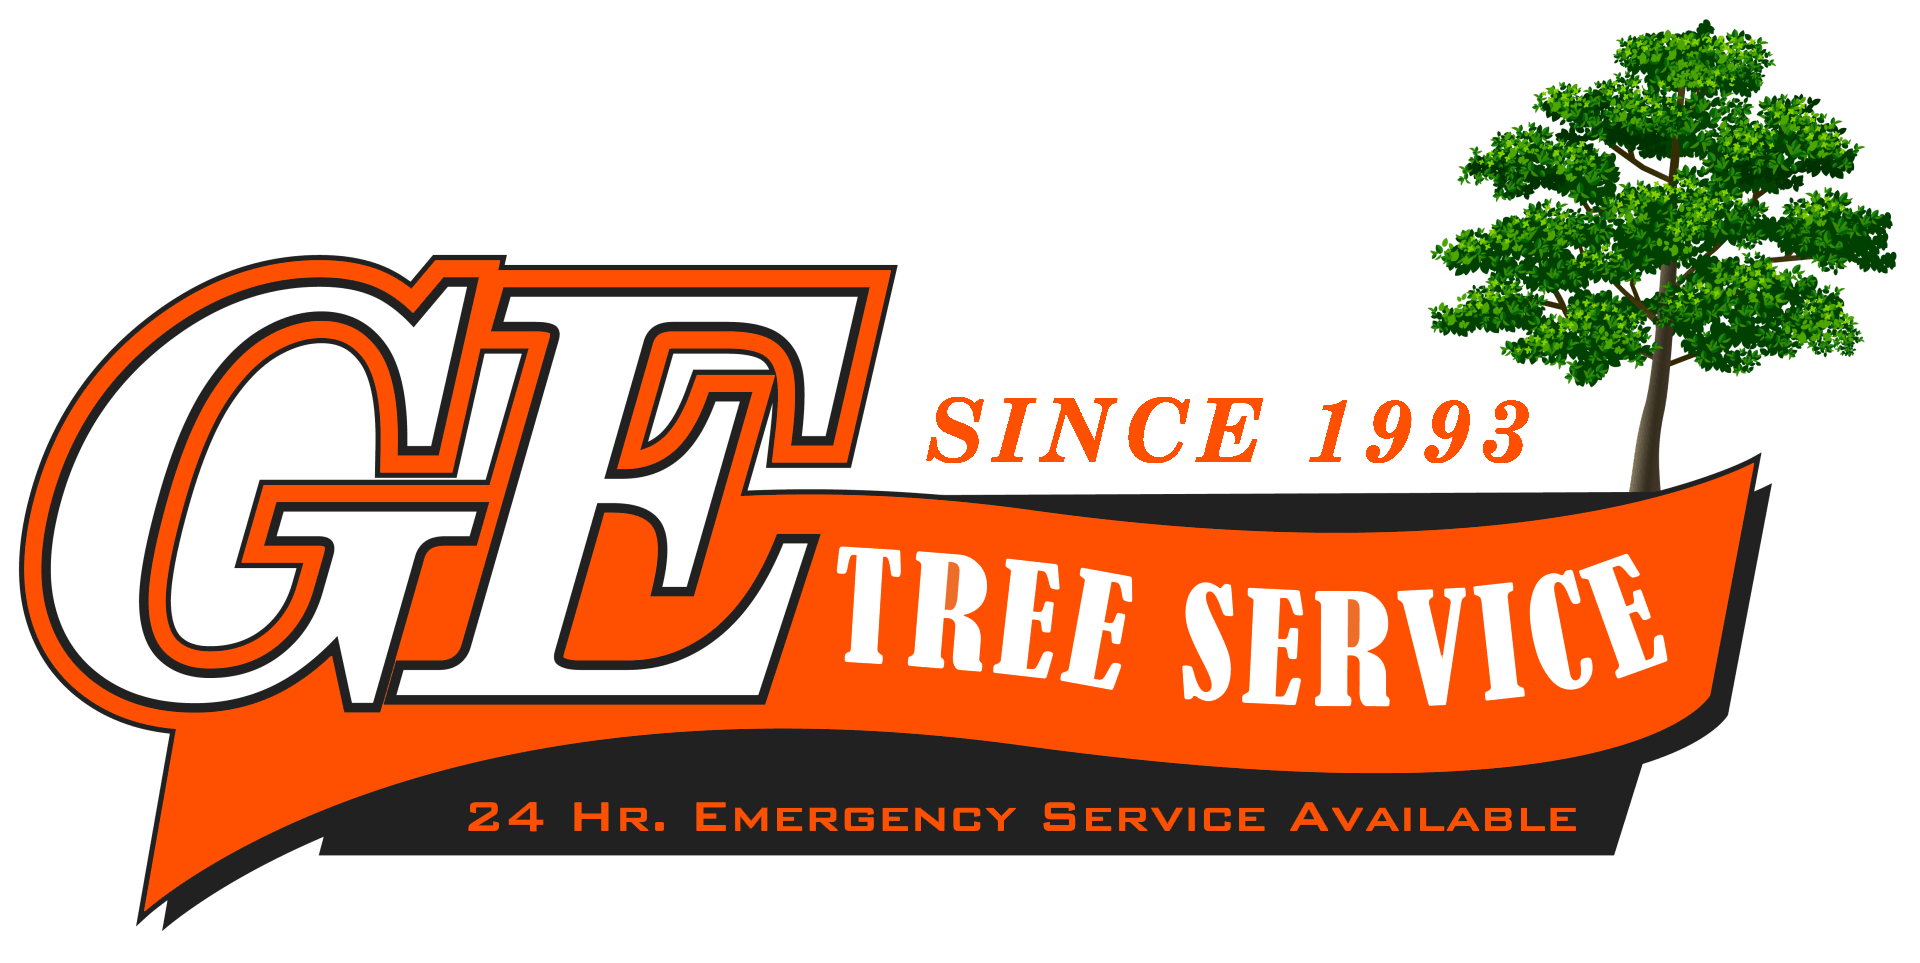 GE Tree Service